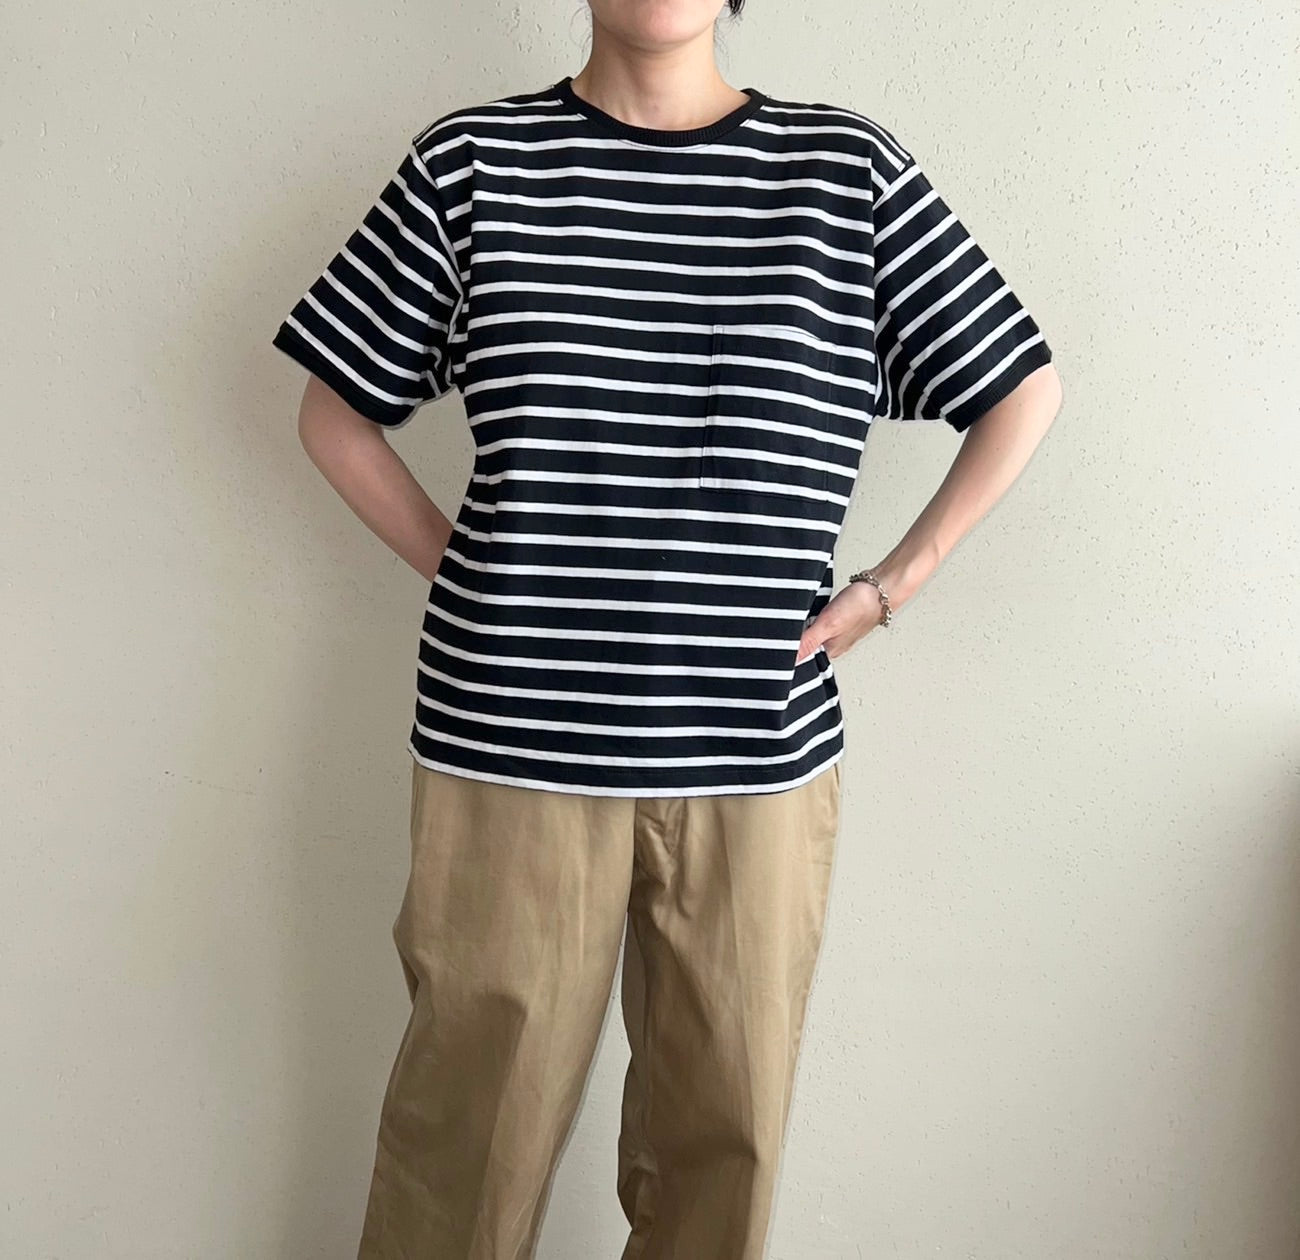 90s Striped T-shirt